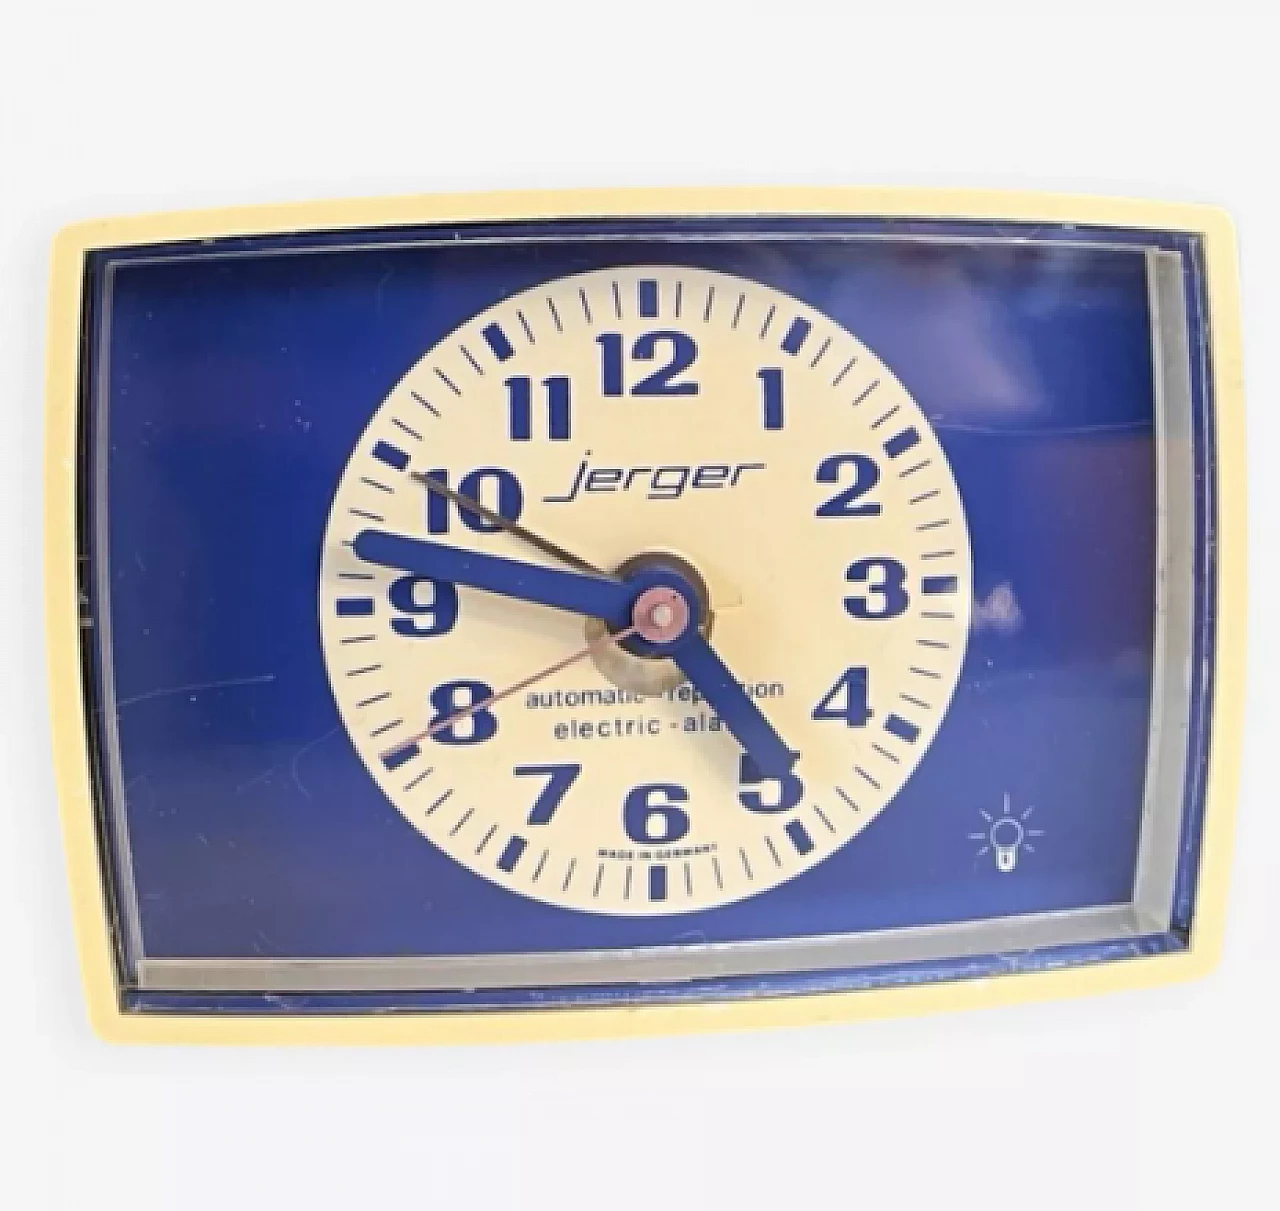 Beige and blue plastic Jerger alarm clock, 1970s 1